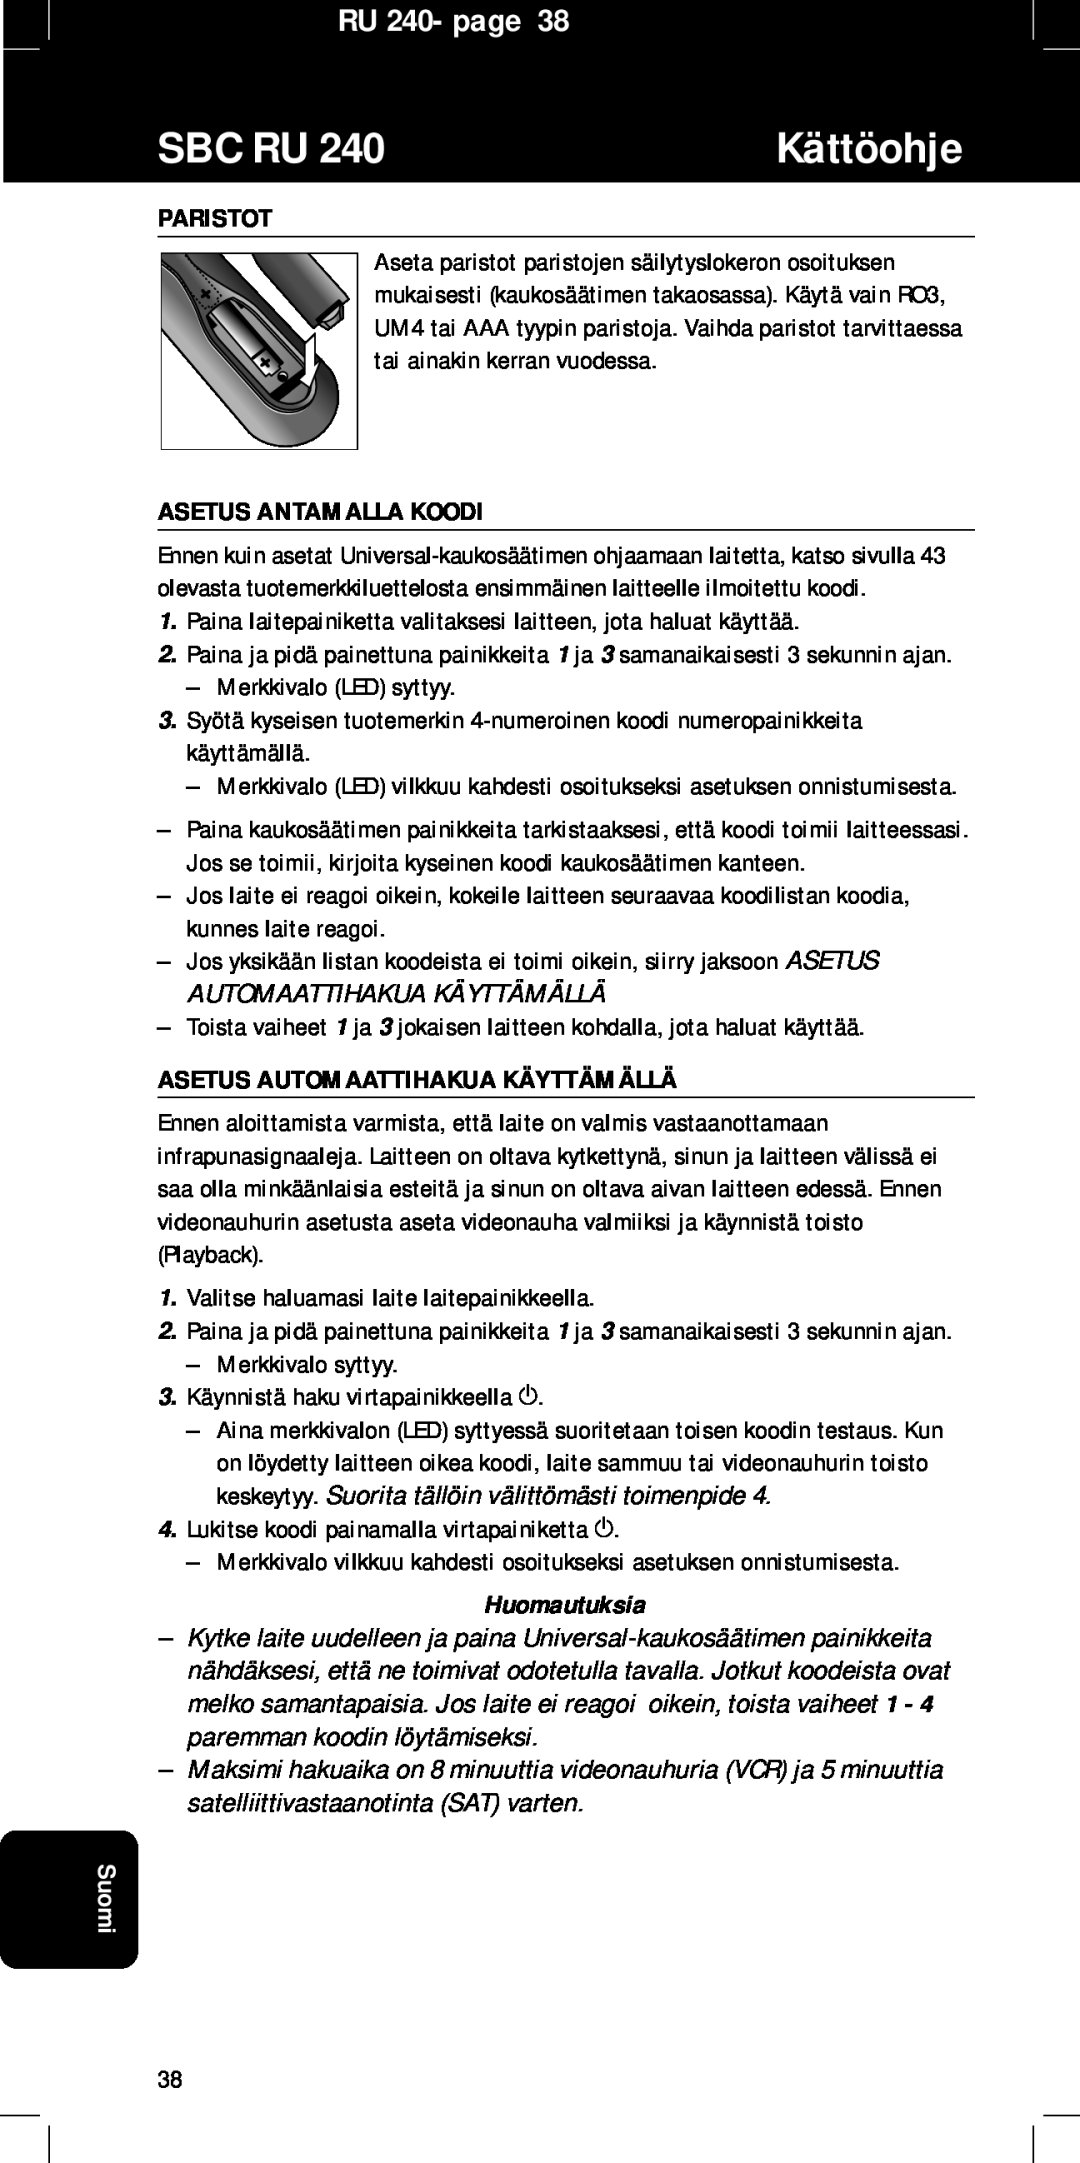 Philips SBC RU240/00U manual Sbc Ru, Kättöohje, RU 240- page, Paristot, Asetus Antamalla Koodi, Huomautuksia 